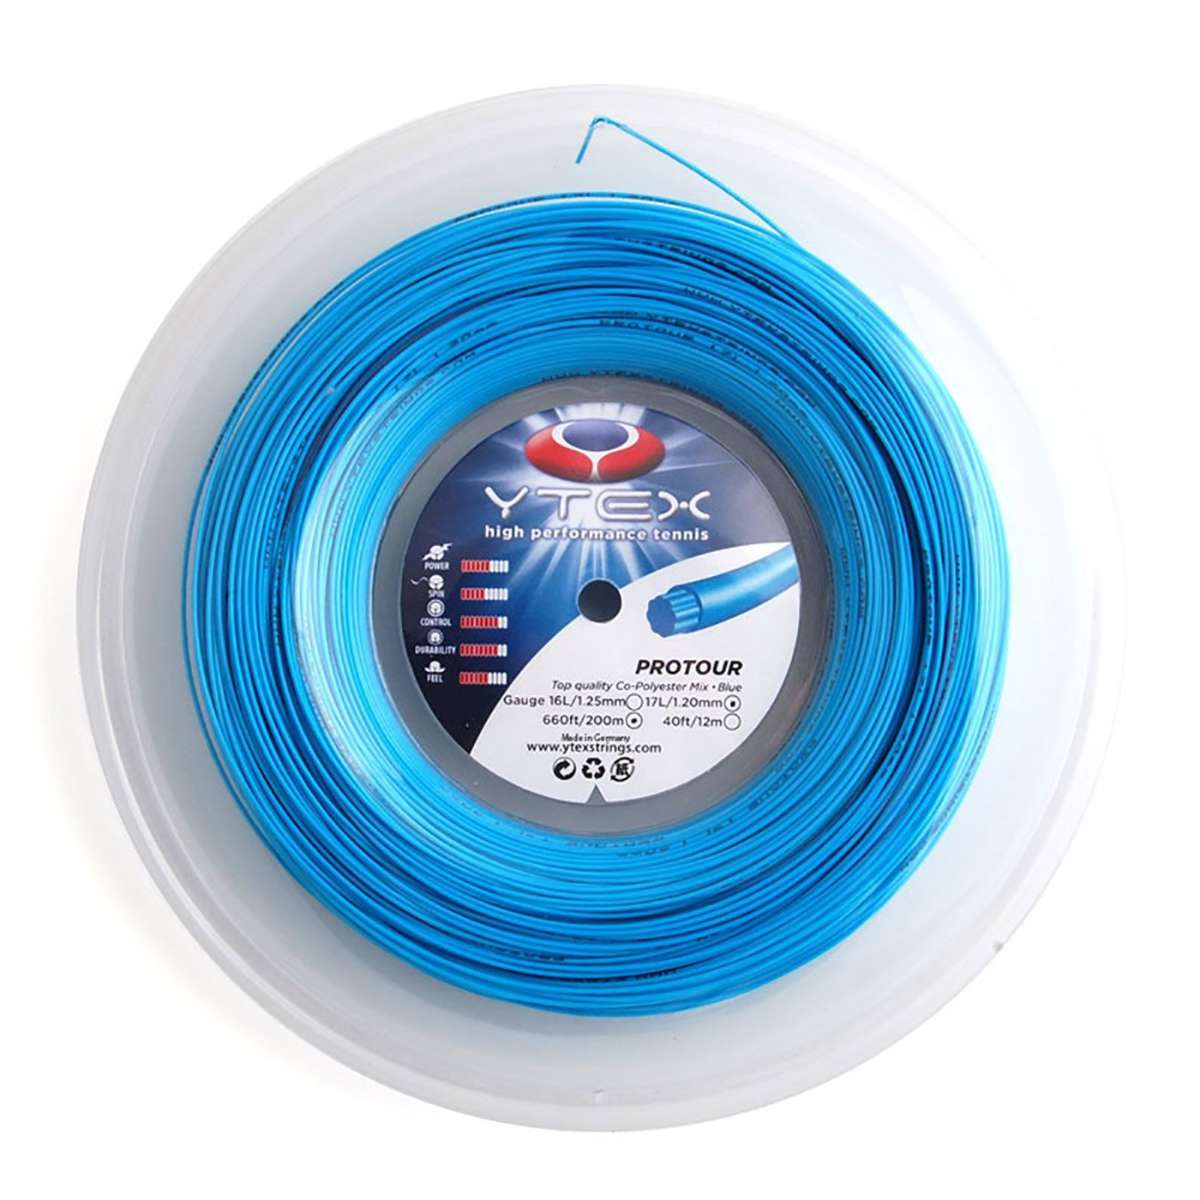 Ytex Protour Blue Tennis Racquet String Reel (17L Gauge, 1.20mm)